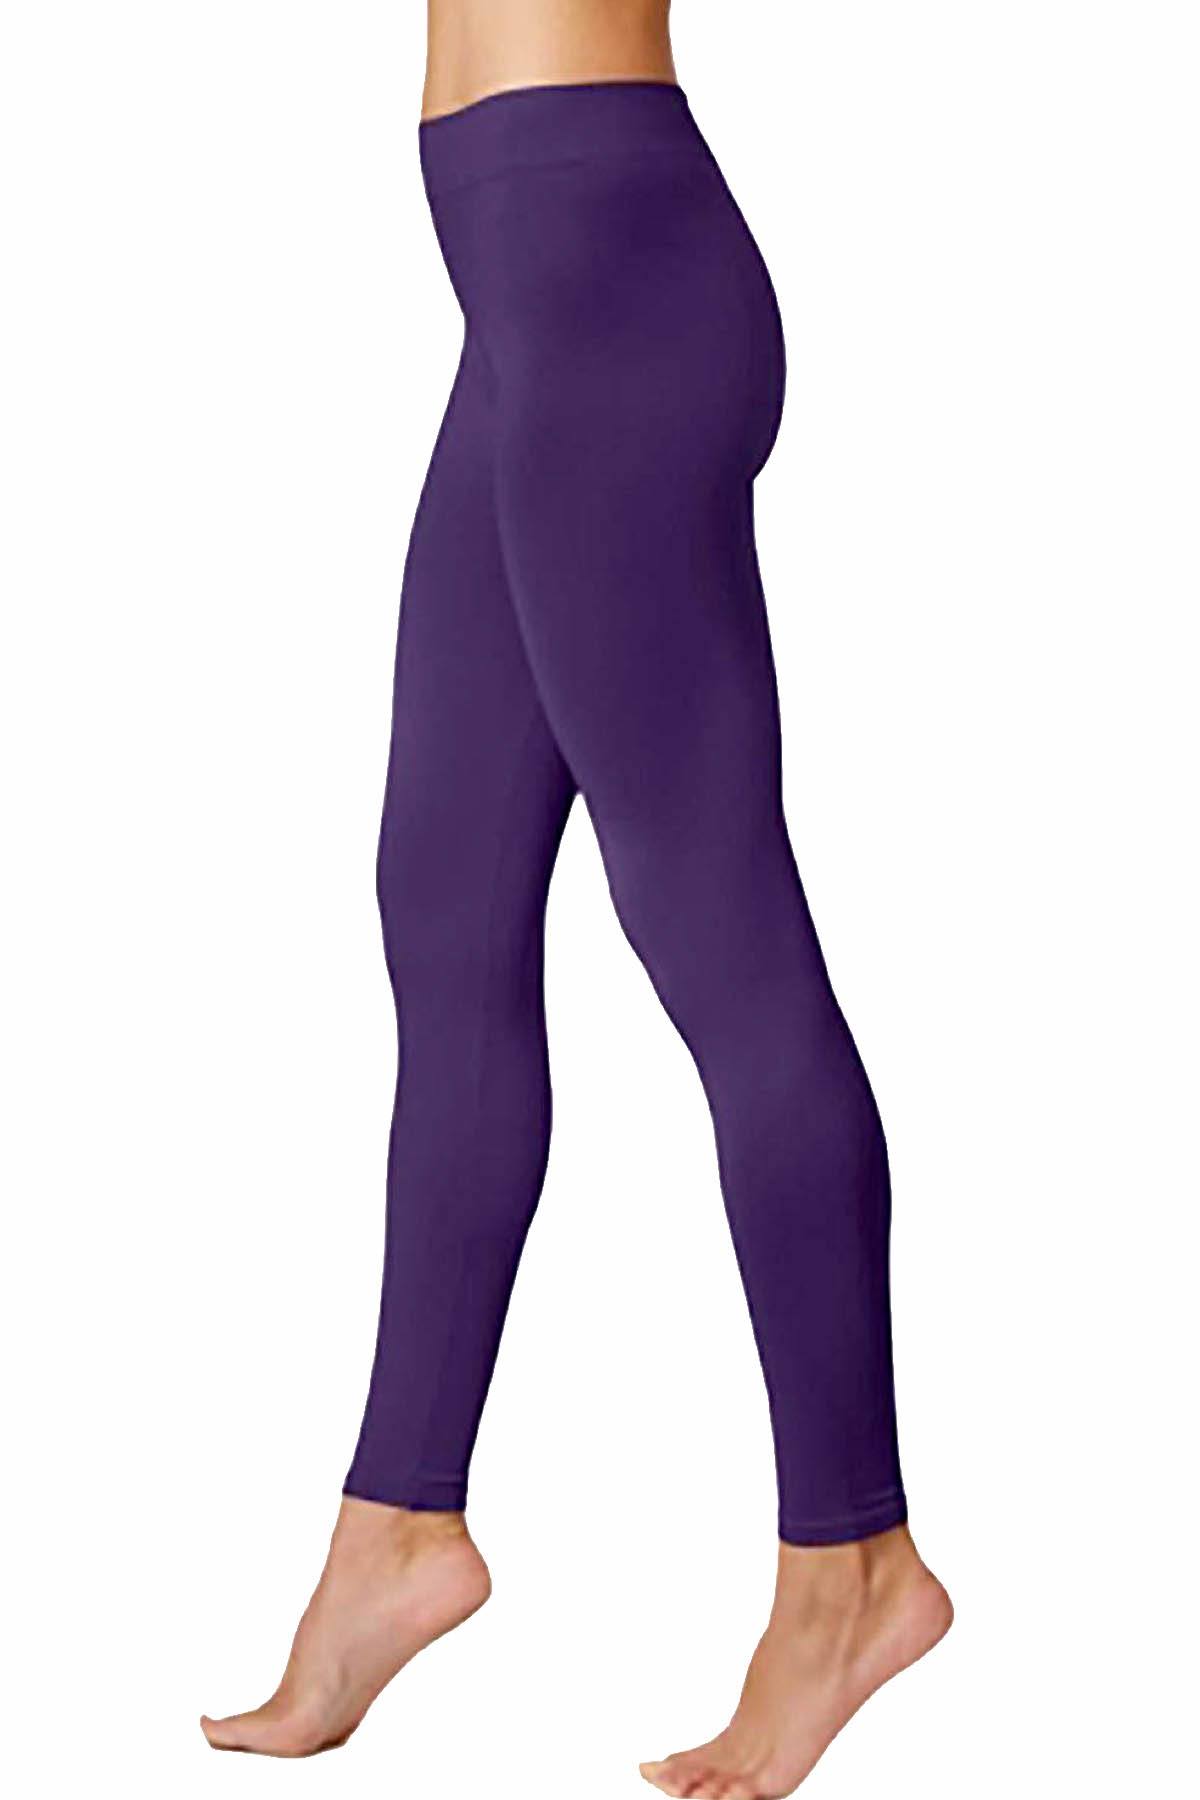 First Looks by HUE Aubergine-Purple Seamless Legging